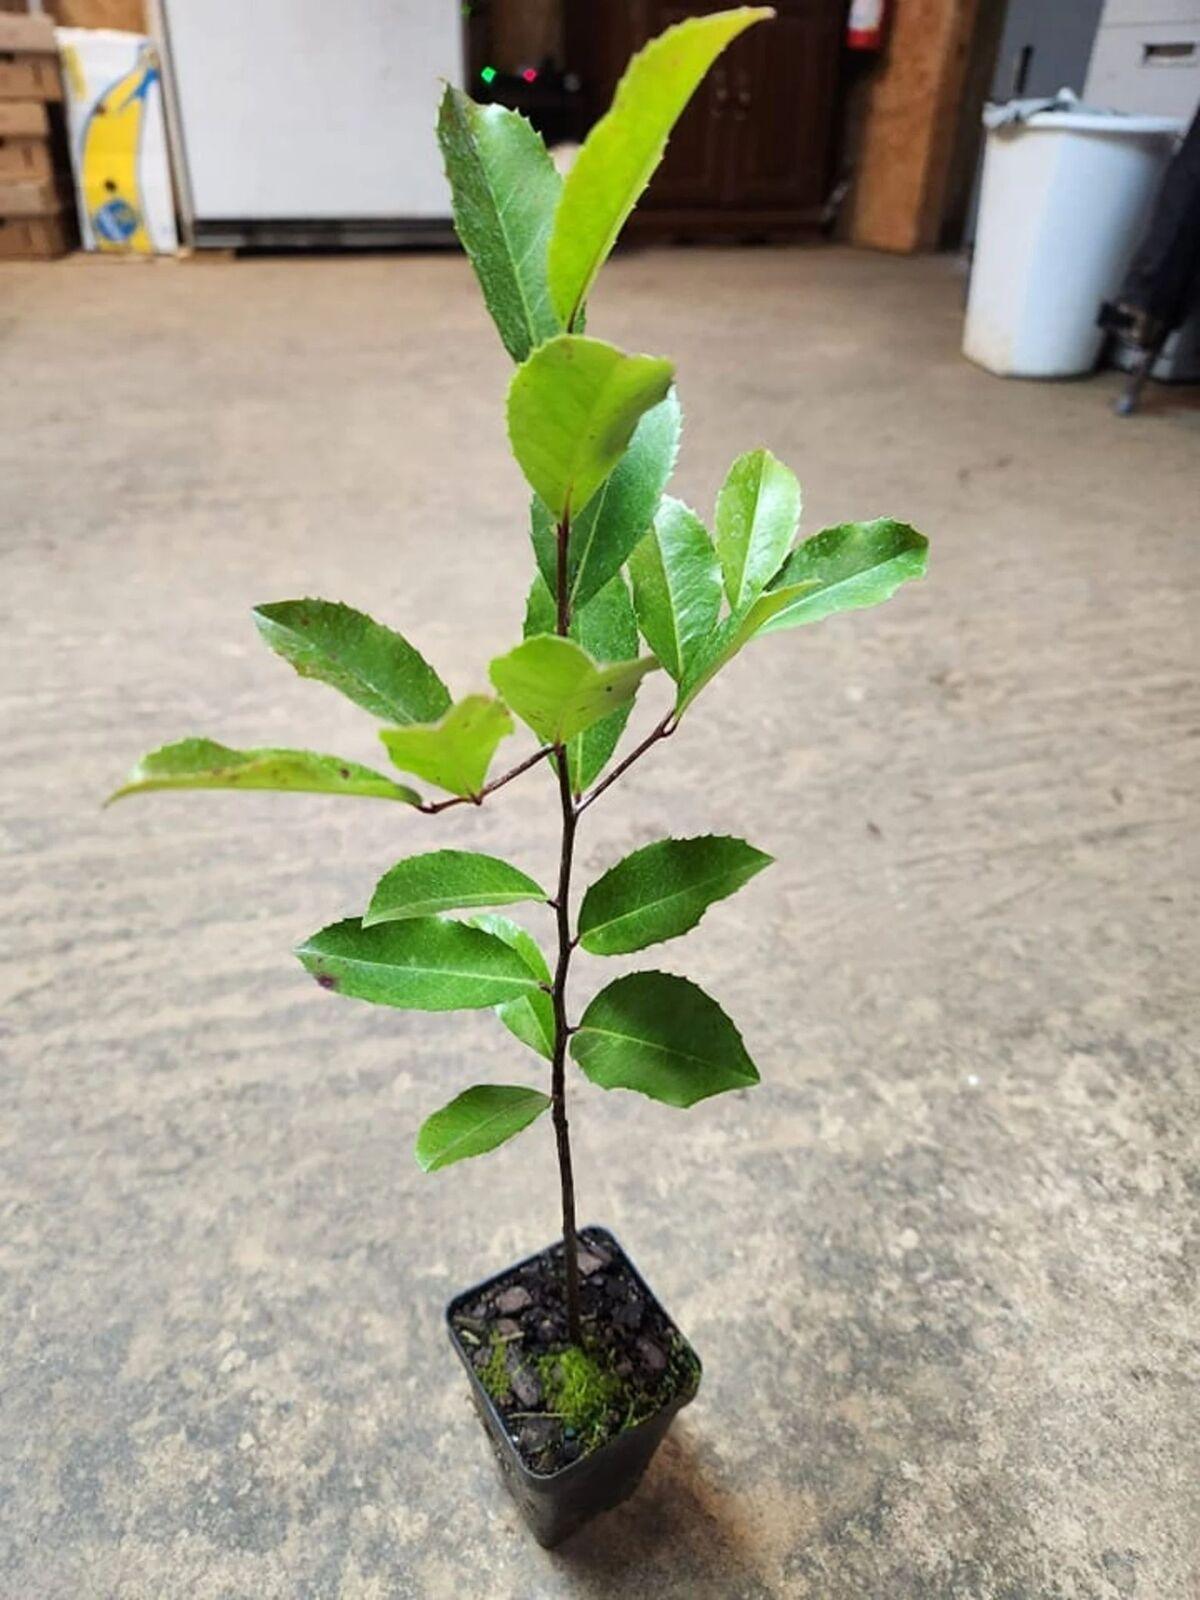 Cherry Laurel Shrub/Hedge - 8-12" Tall Seedling - Live Plant - 3" Pot - The Nursery Center